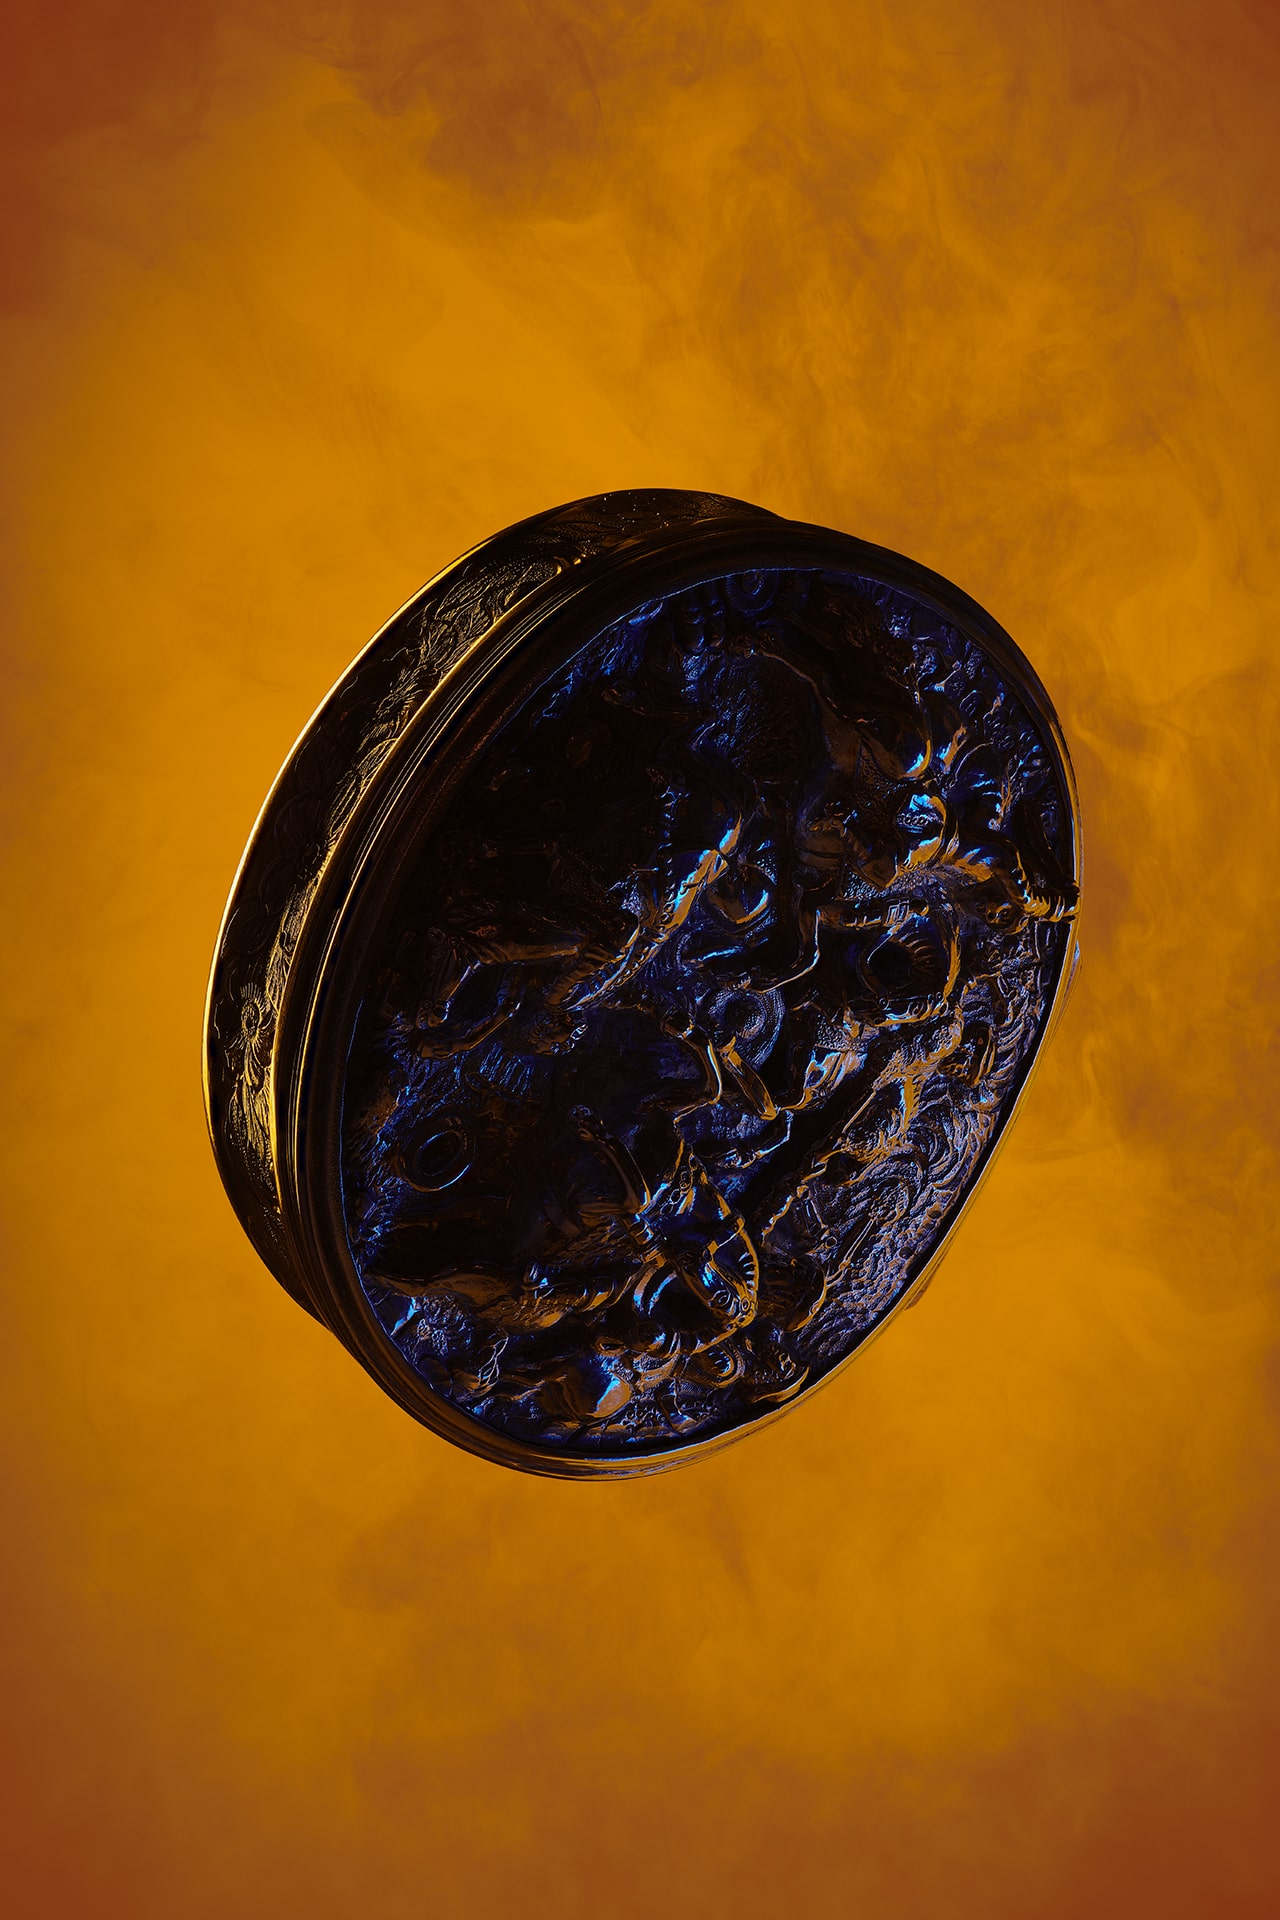 Circular dark object with raised pattern, on an orange smokey background